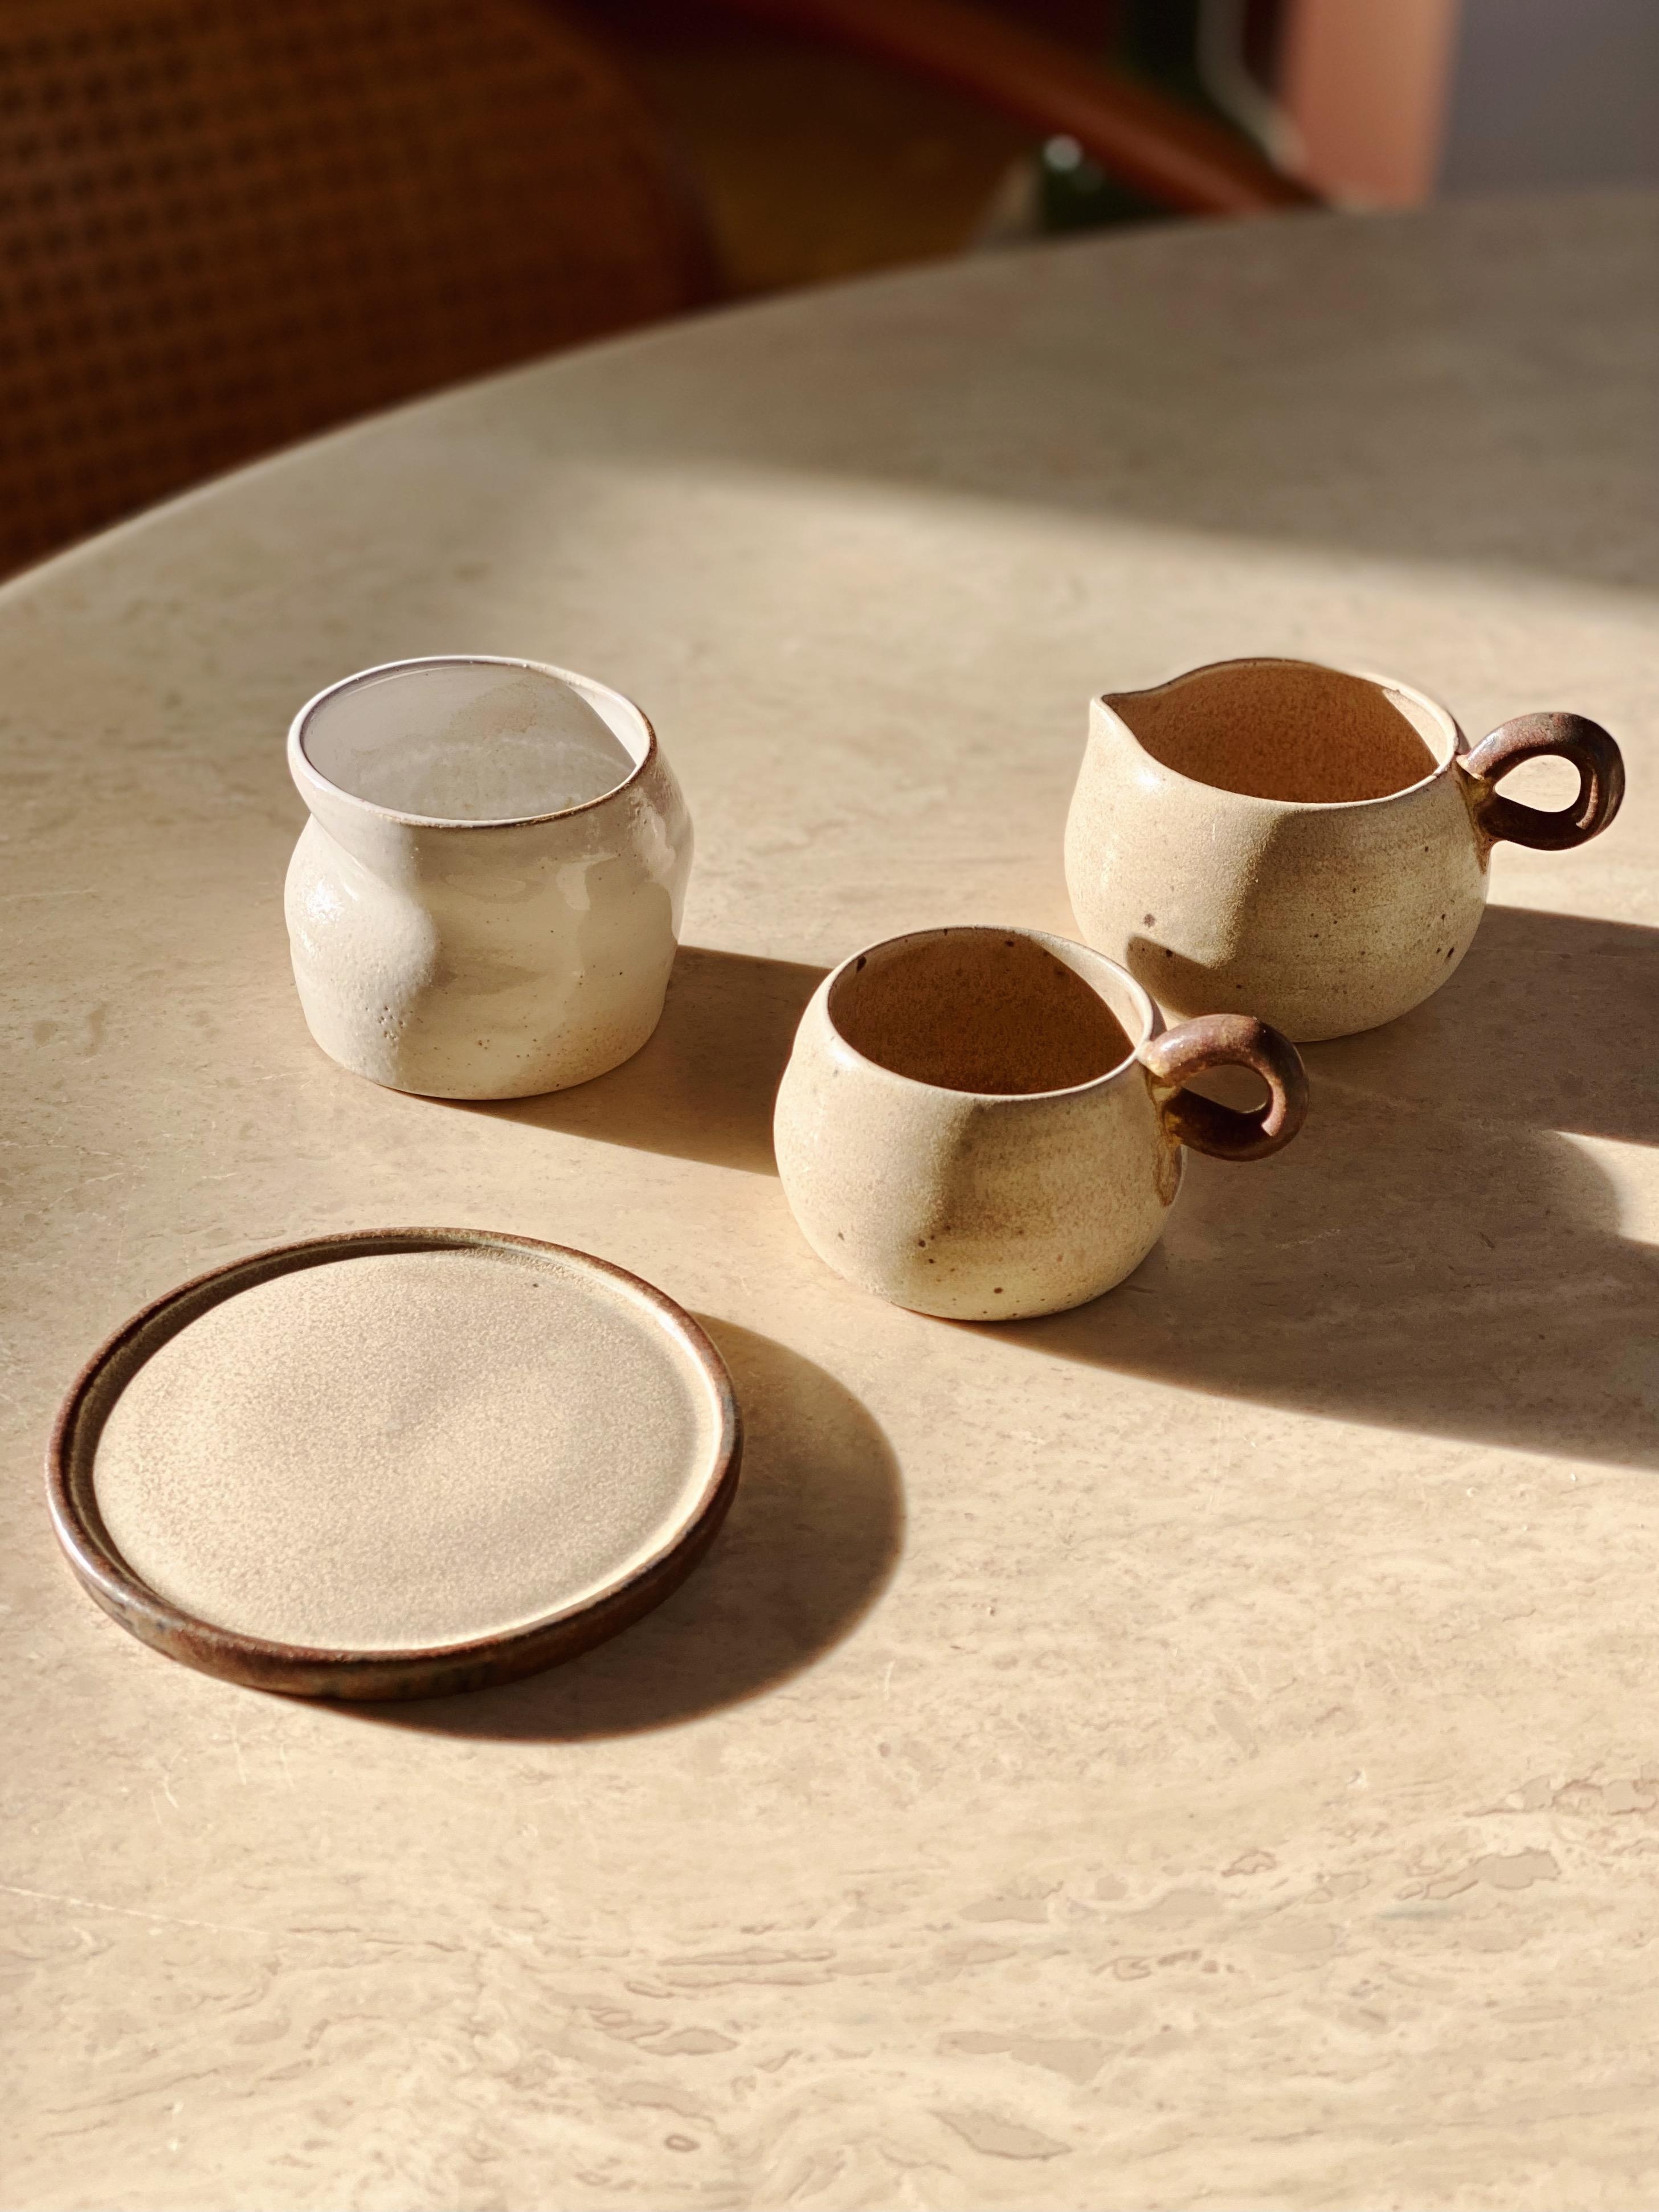 First selfmade ceramics ❤️
#keramik #diy #töpfern 